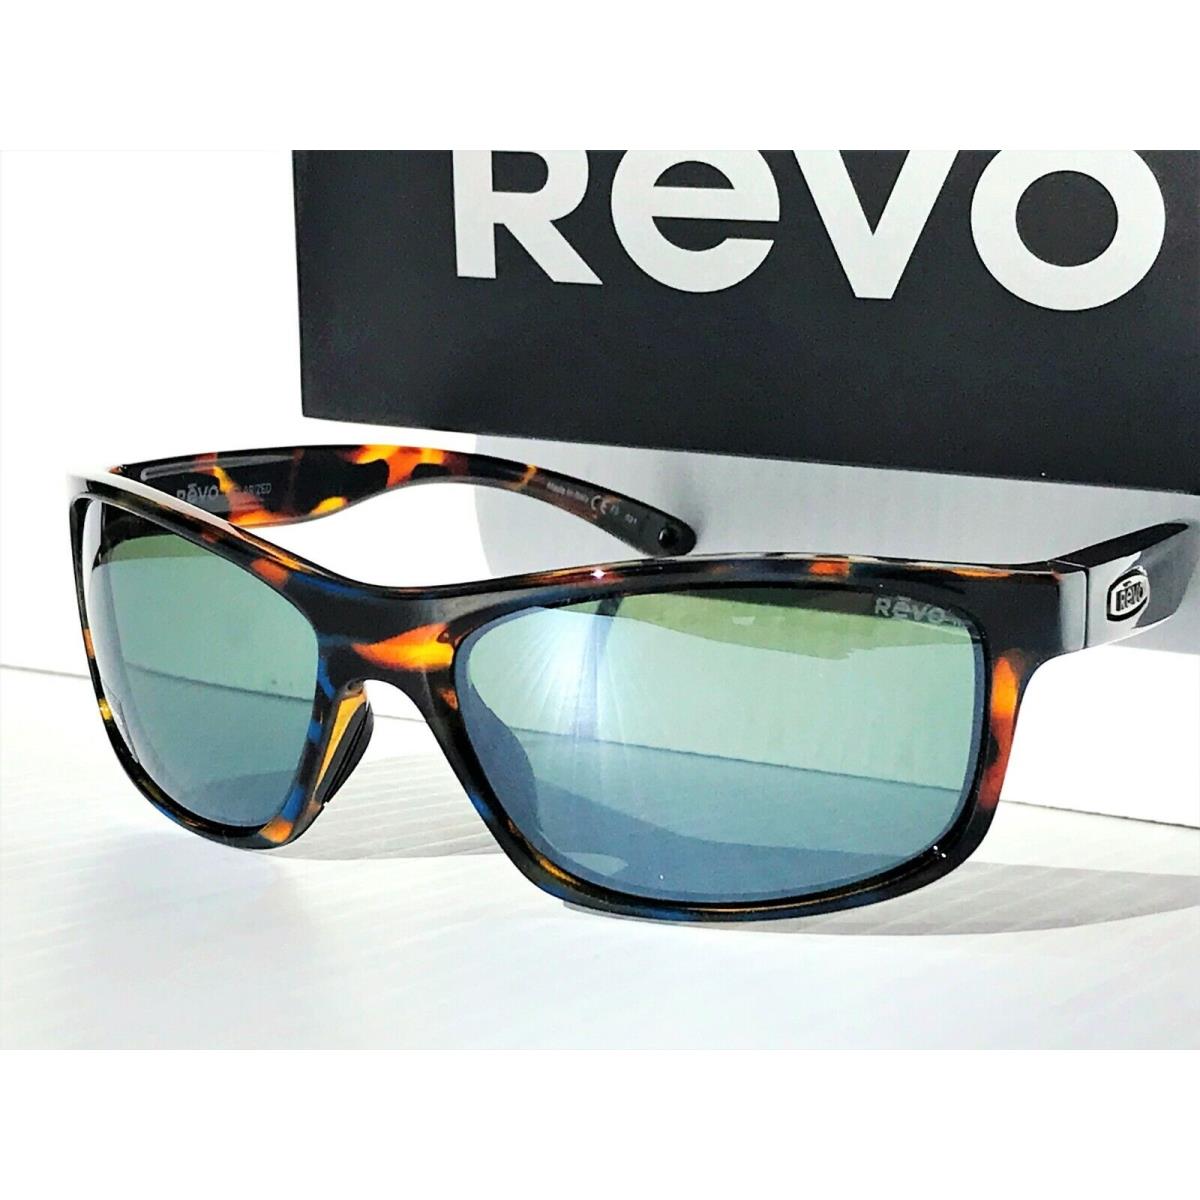 Revo Harness G Blue Tortoise Polarized Silver Glass Sunglass 1175 22 SG50